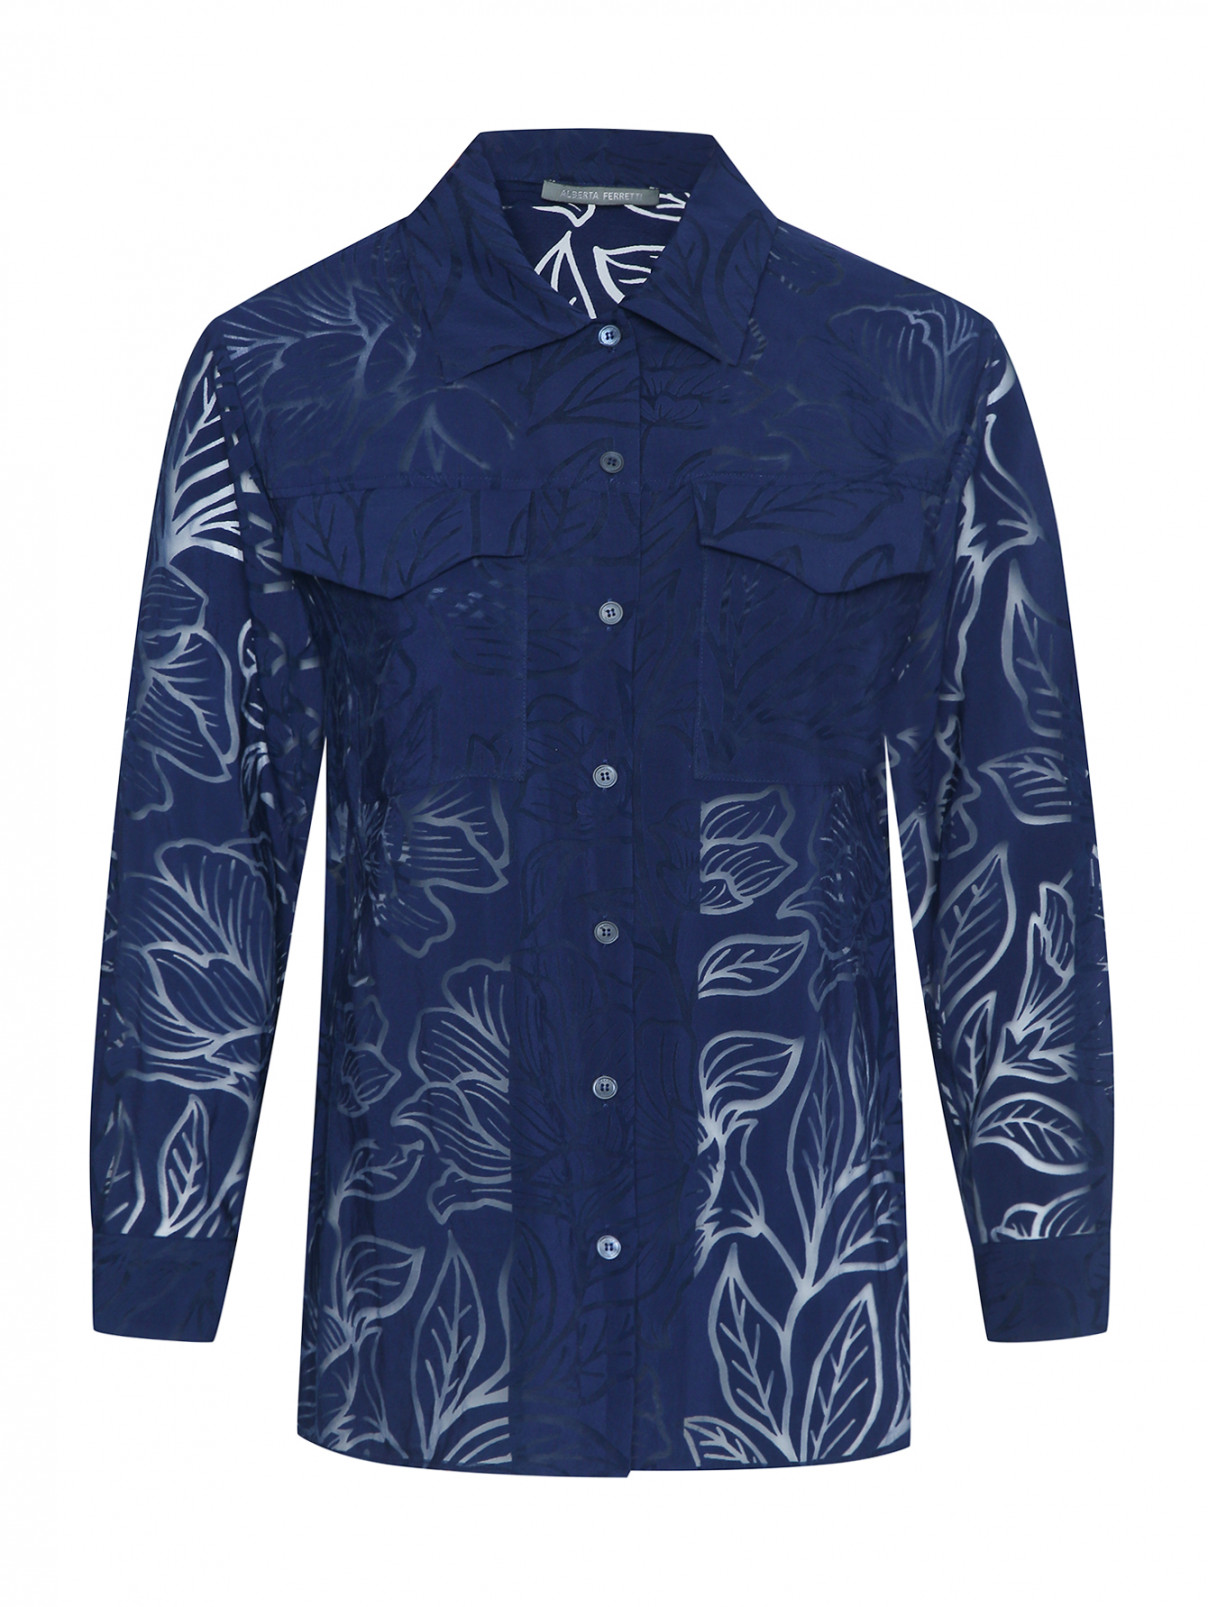 Блуза с накладными карманами Alberta Ferretti  –  Общий вид  – Цвет:  Узор